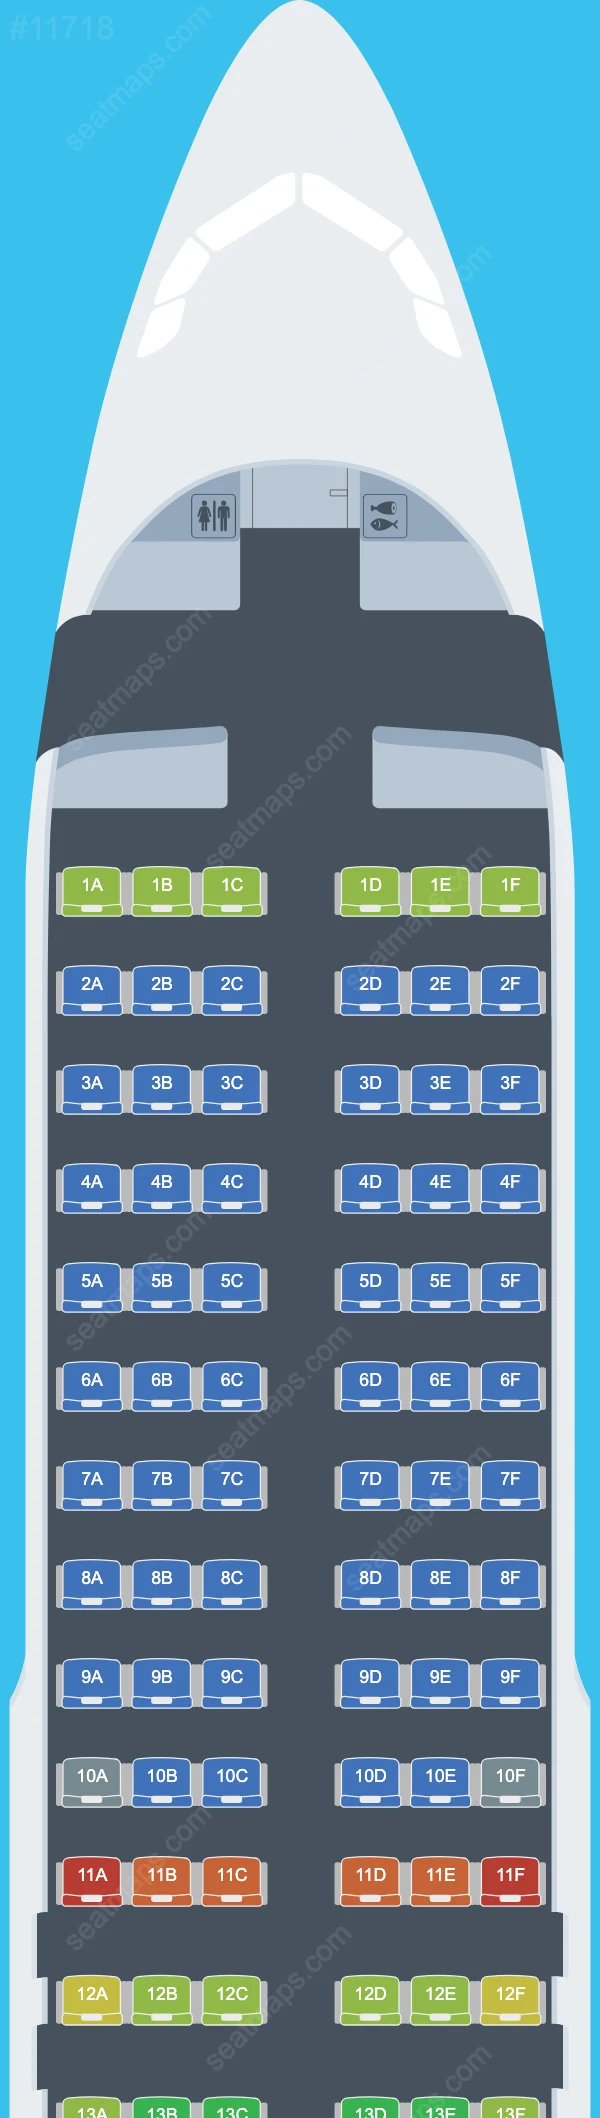 Схема салонов KM Malta Airlines в самолетах Airbus A320 A320-200